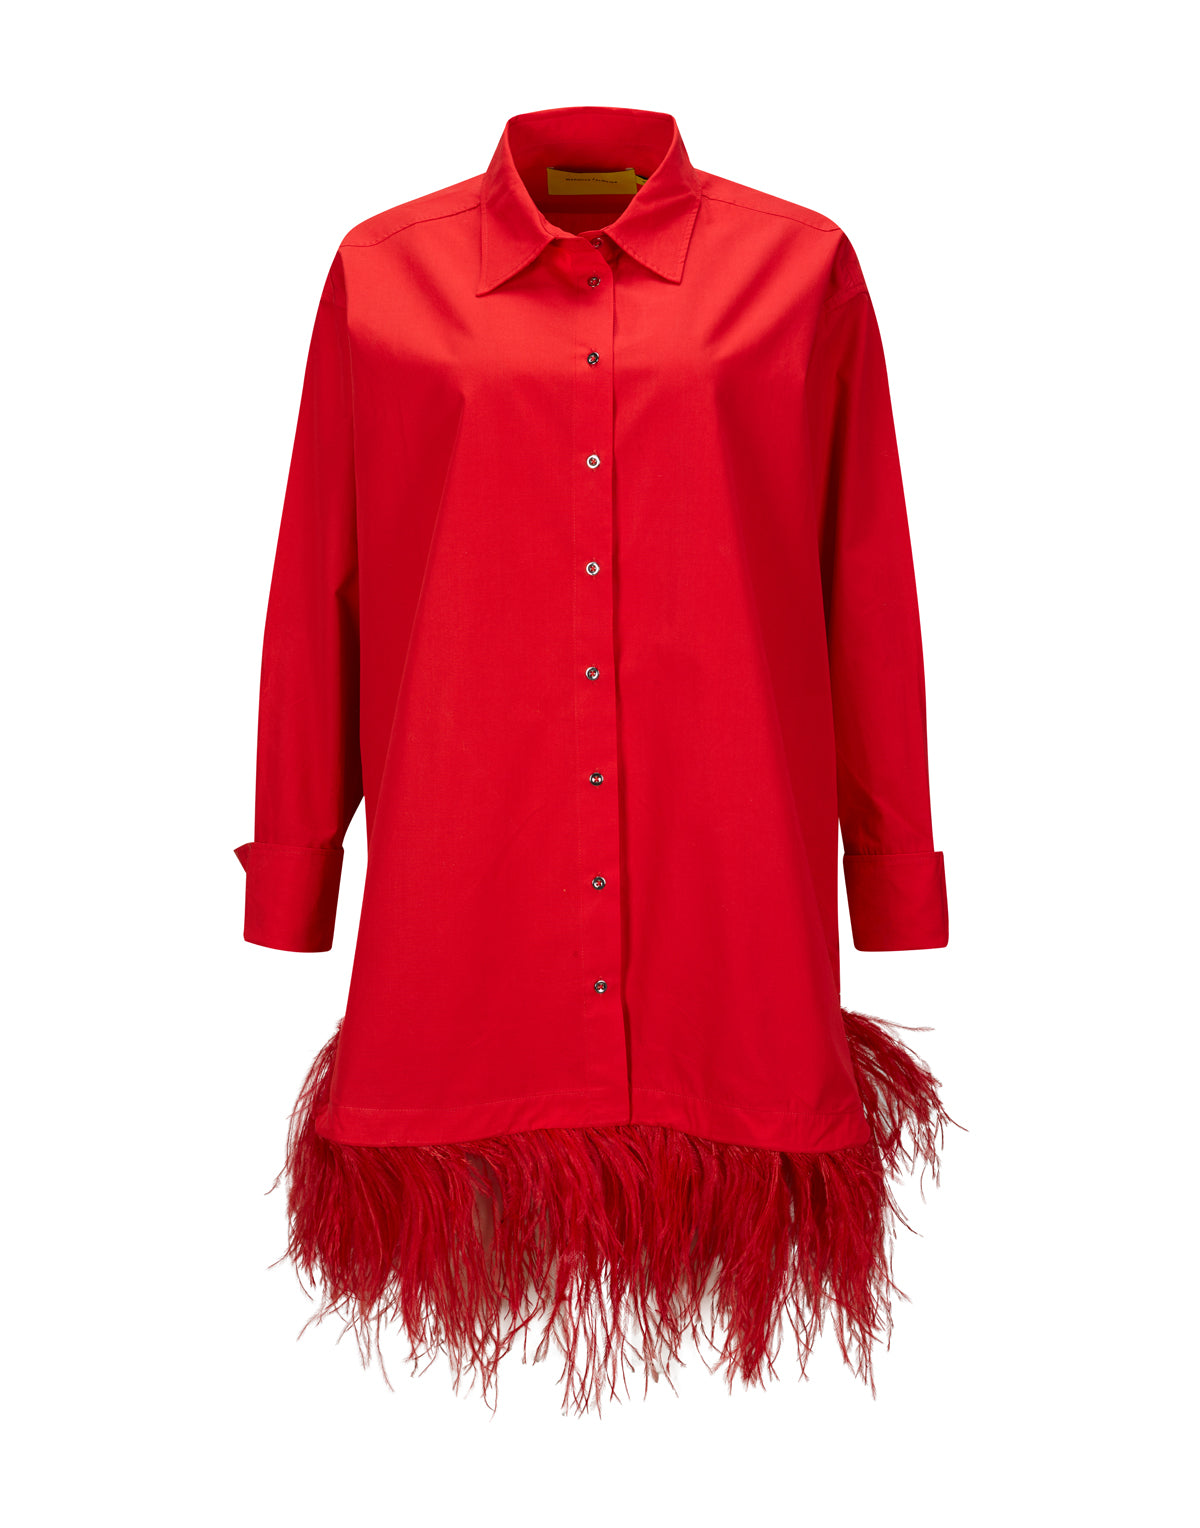 RED FEATHER HEM SHIRT DRESS marques almeida